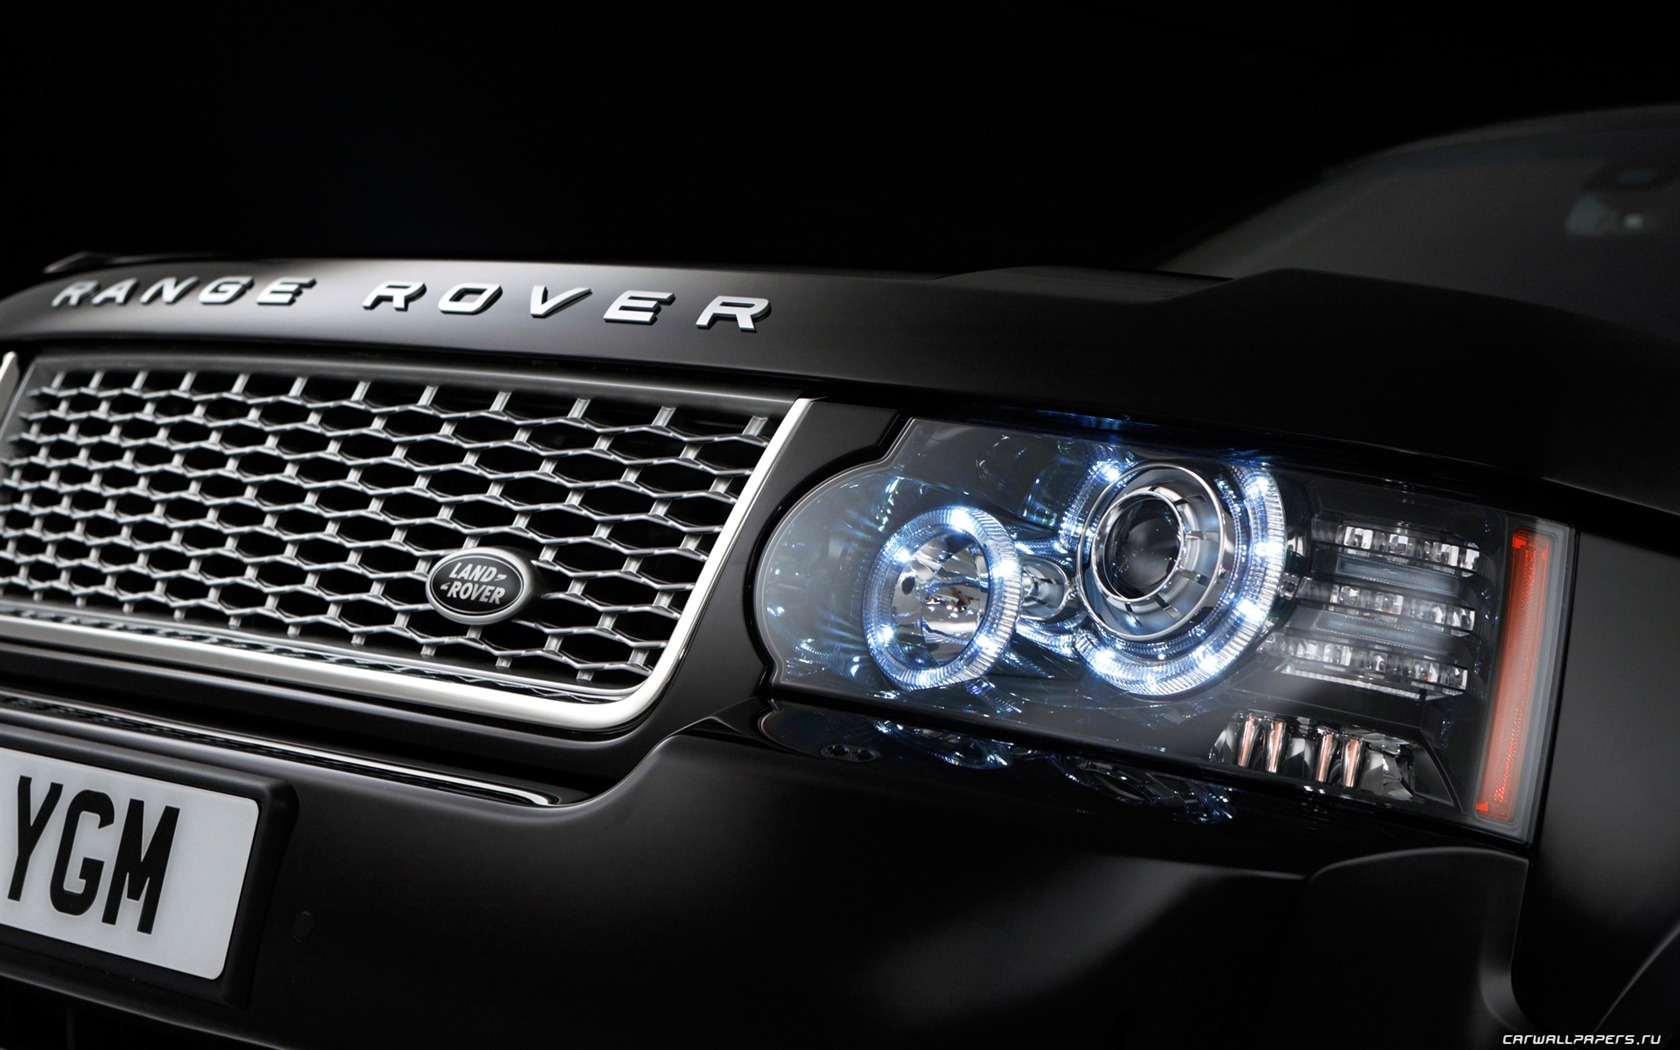 Land Rover Range Rover Black Edition - 2011 路虎20 - 1680x1050